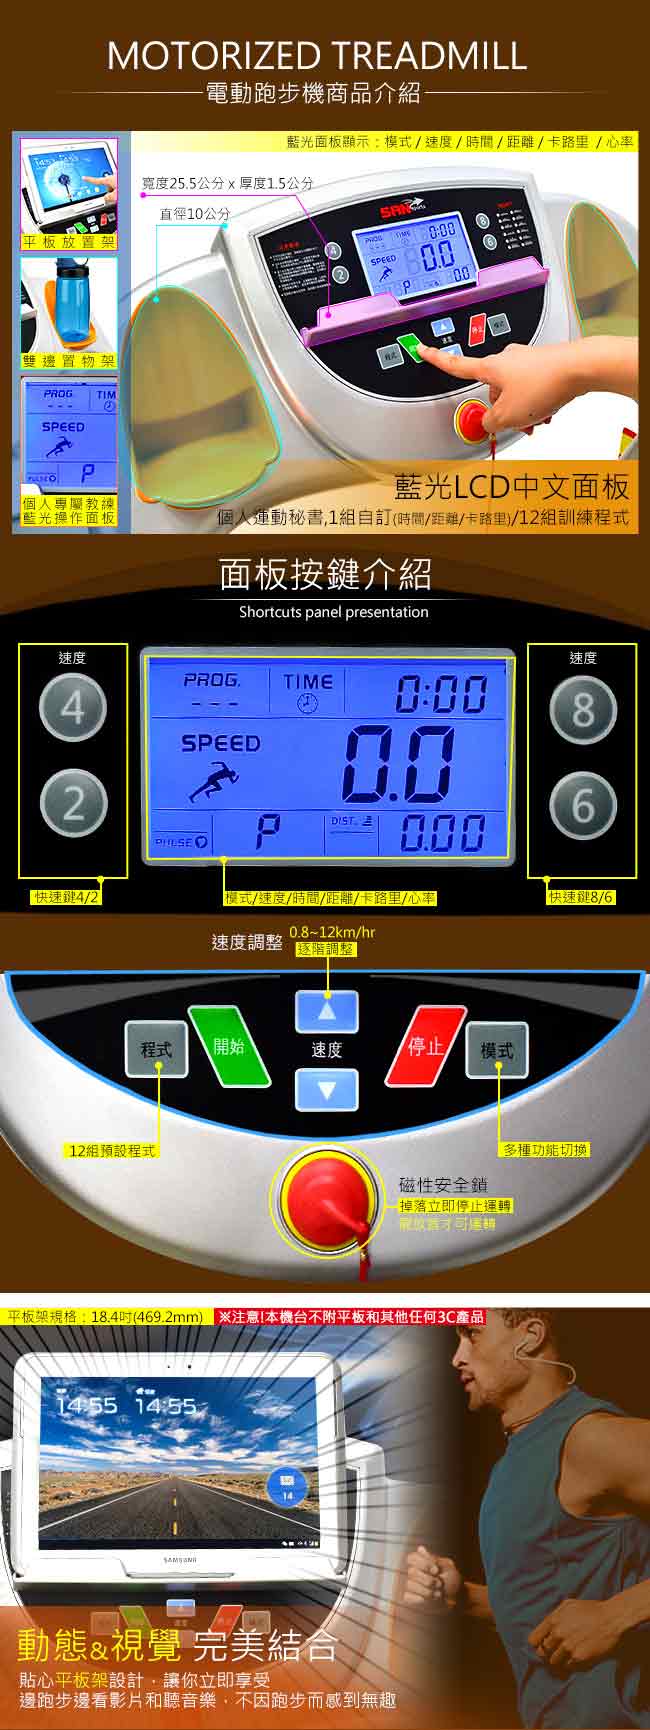 【SAN SPORTS】大黃蜂3HP電動跑步機